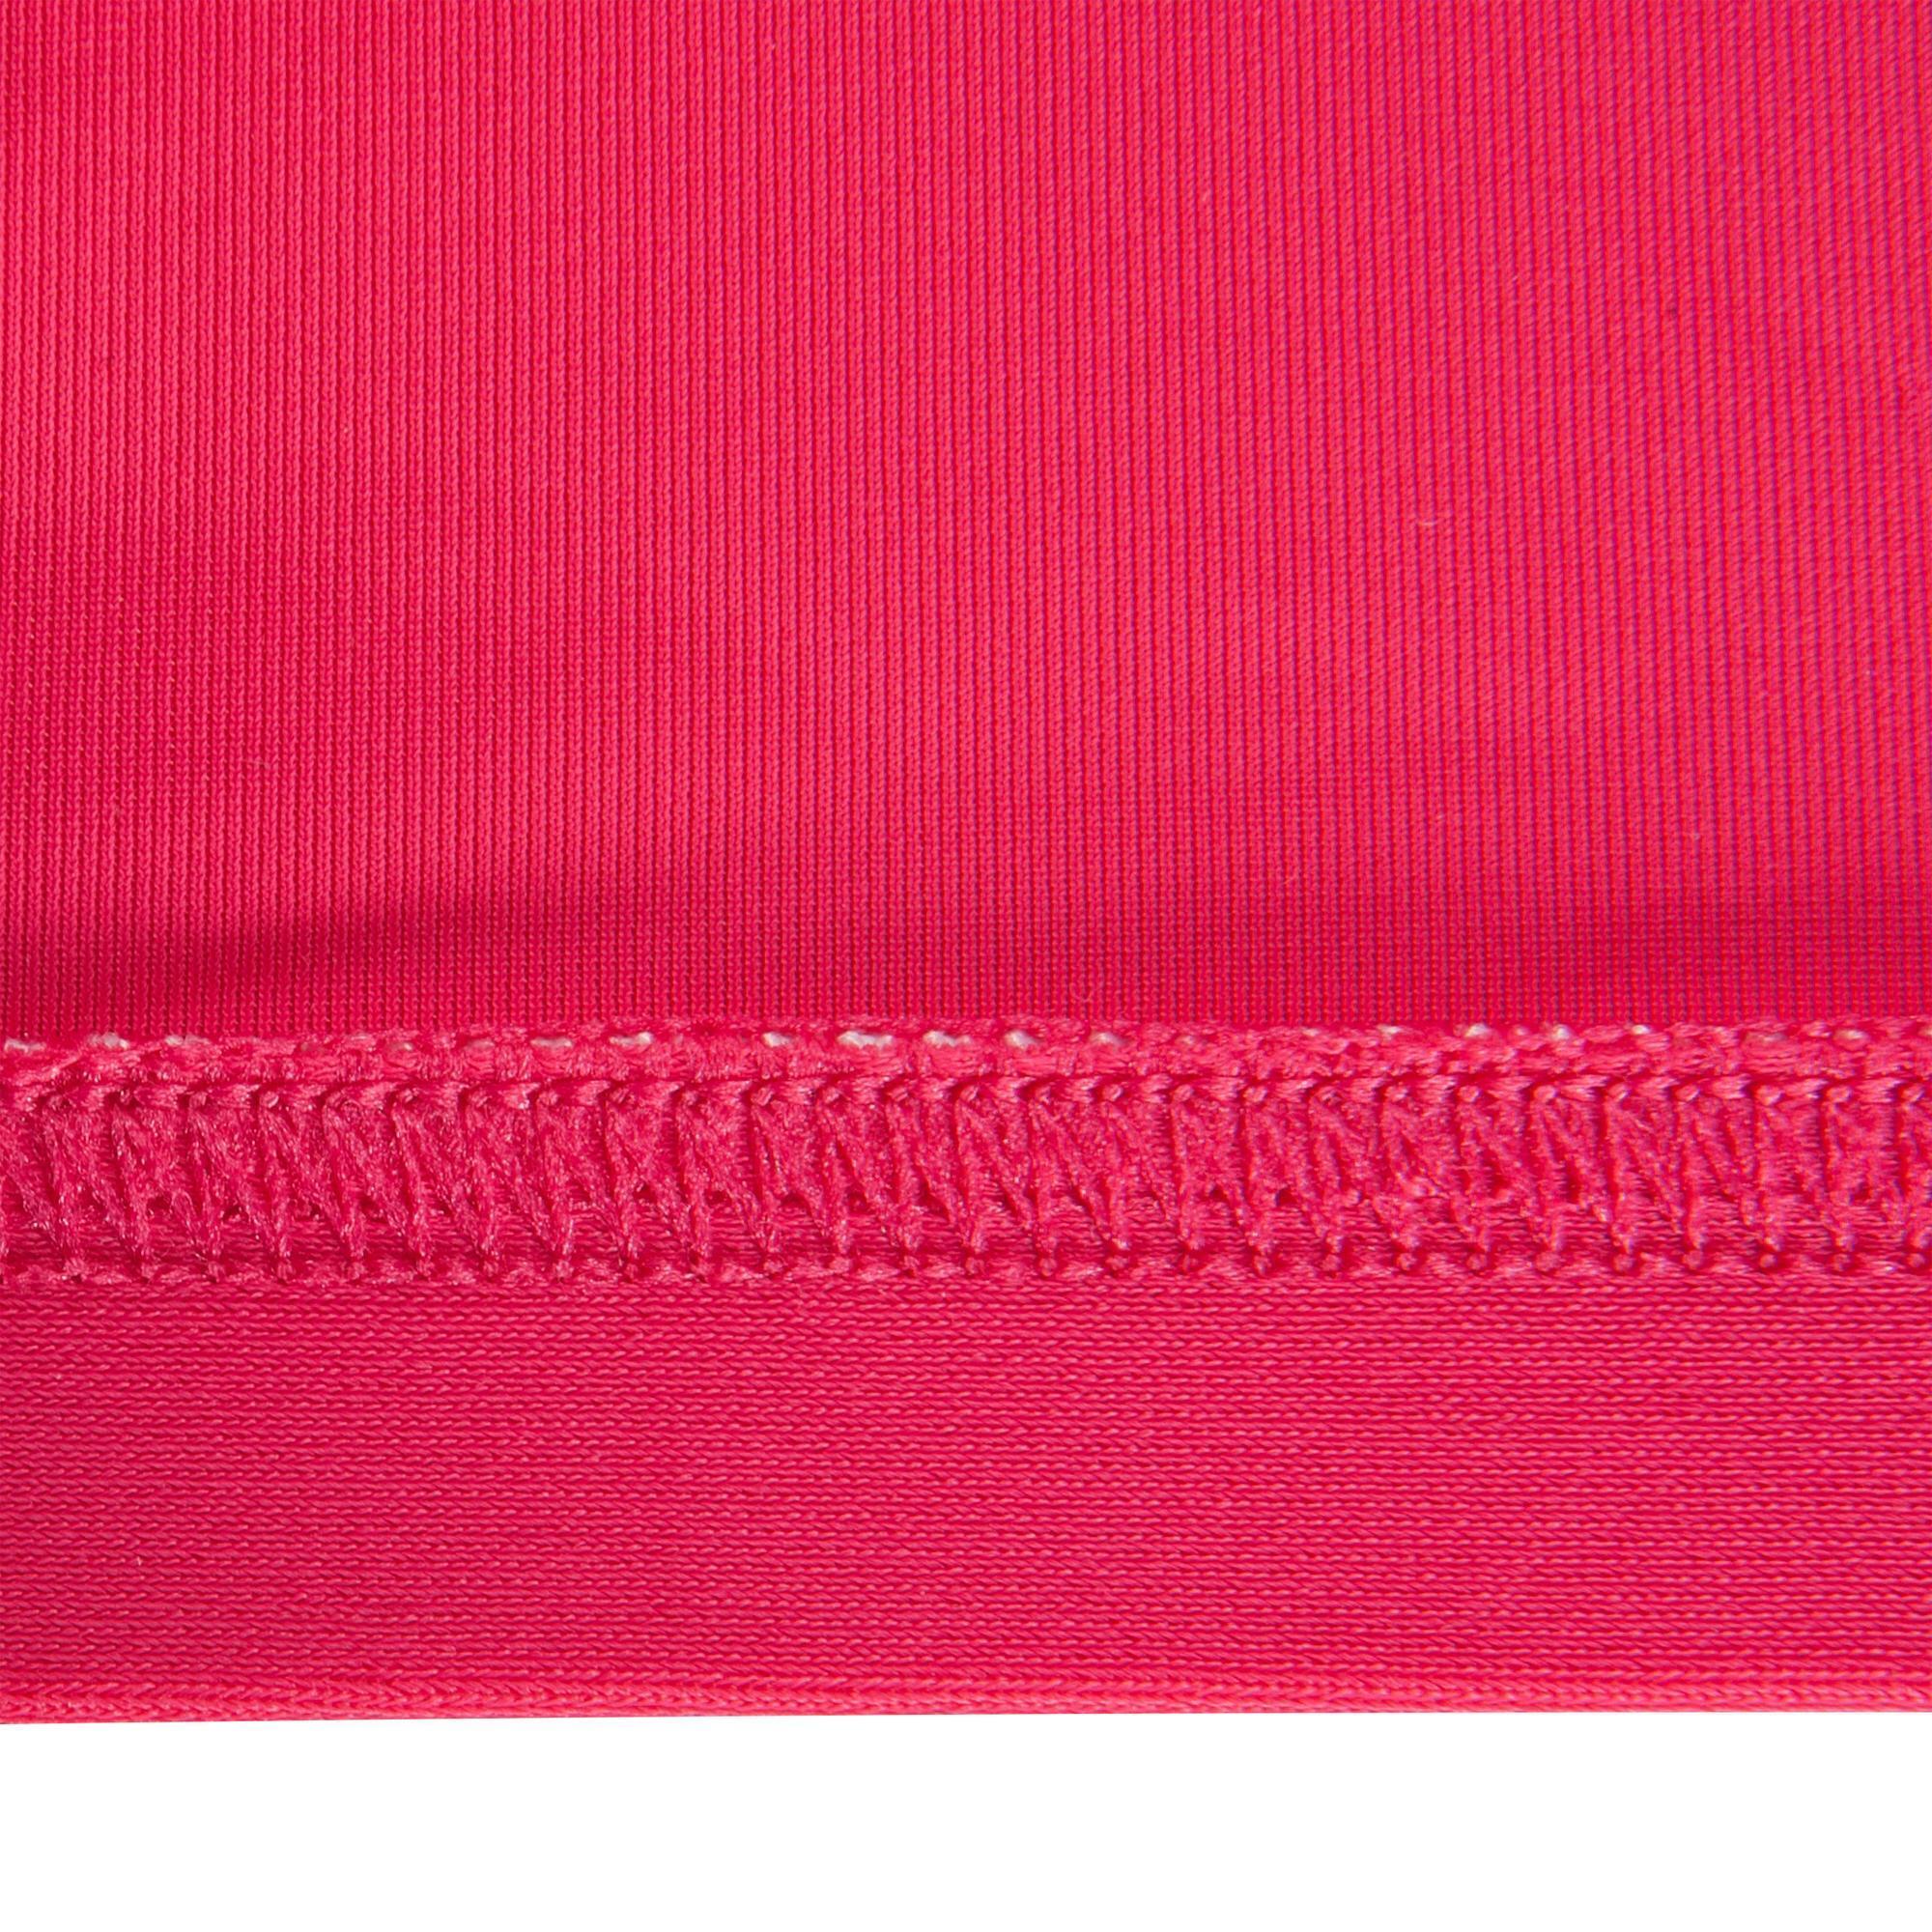 Mesh swim cap - plain fabric - pink 4/5